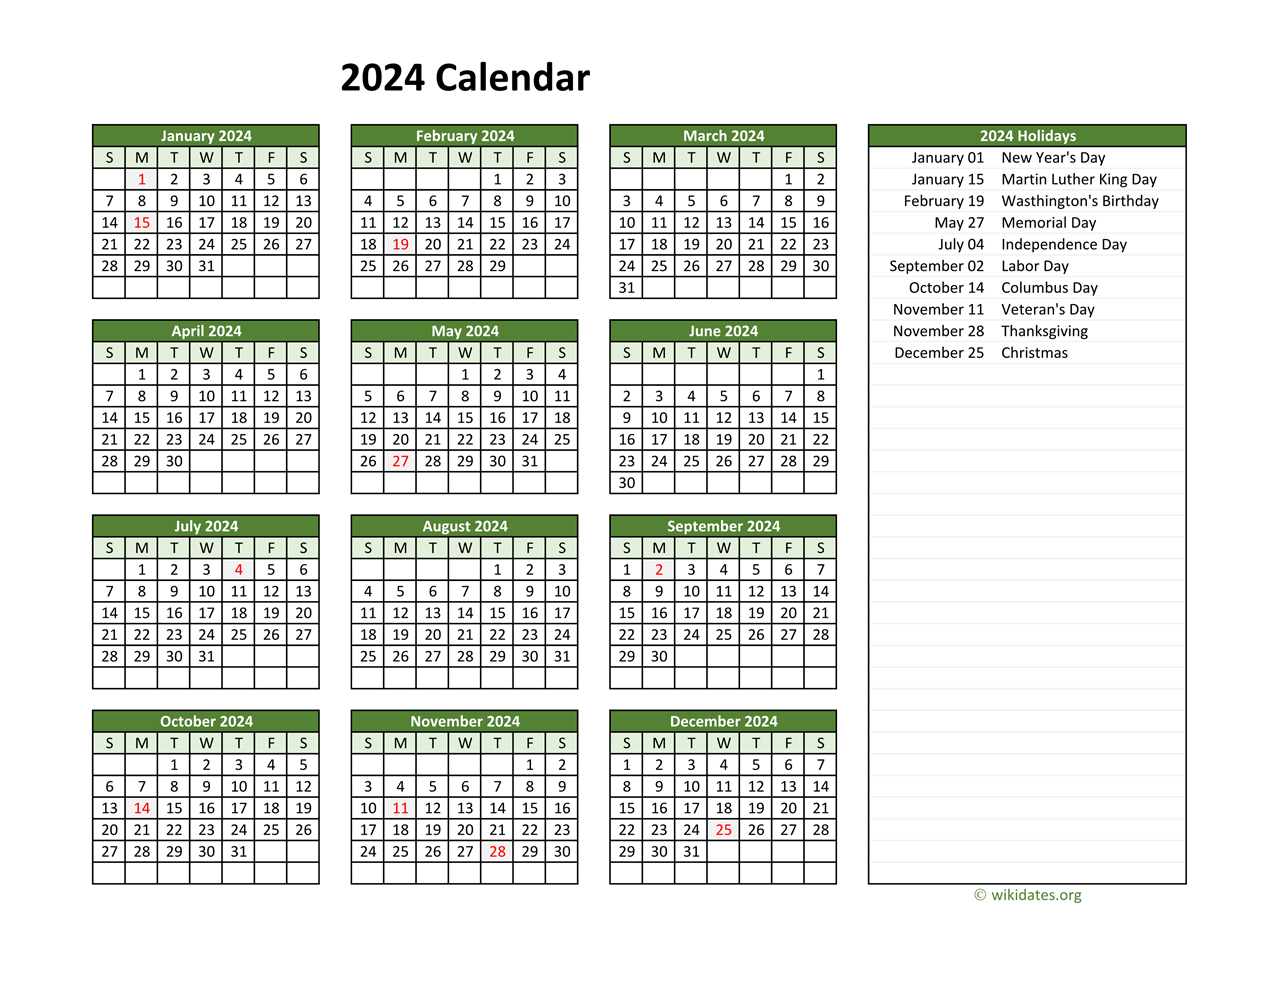 Printable 2024 Calendar With Federal Holidays | Wikidates for 2024 Calendar With Federal Holidays Printable